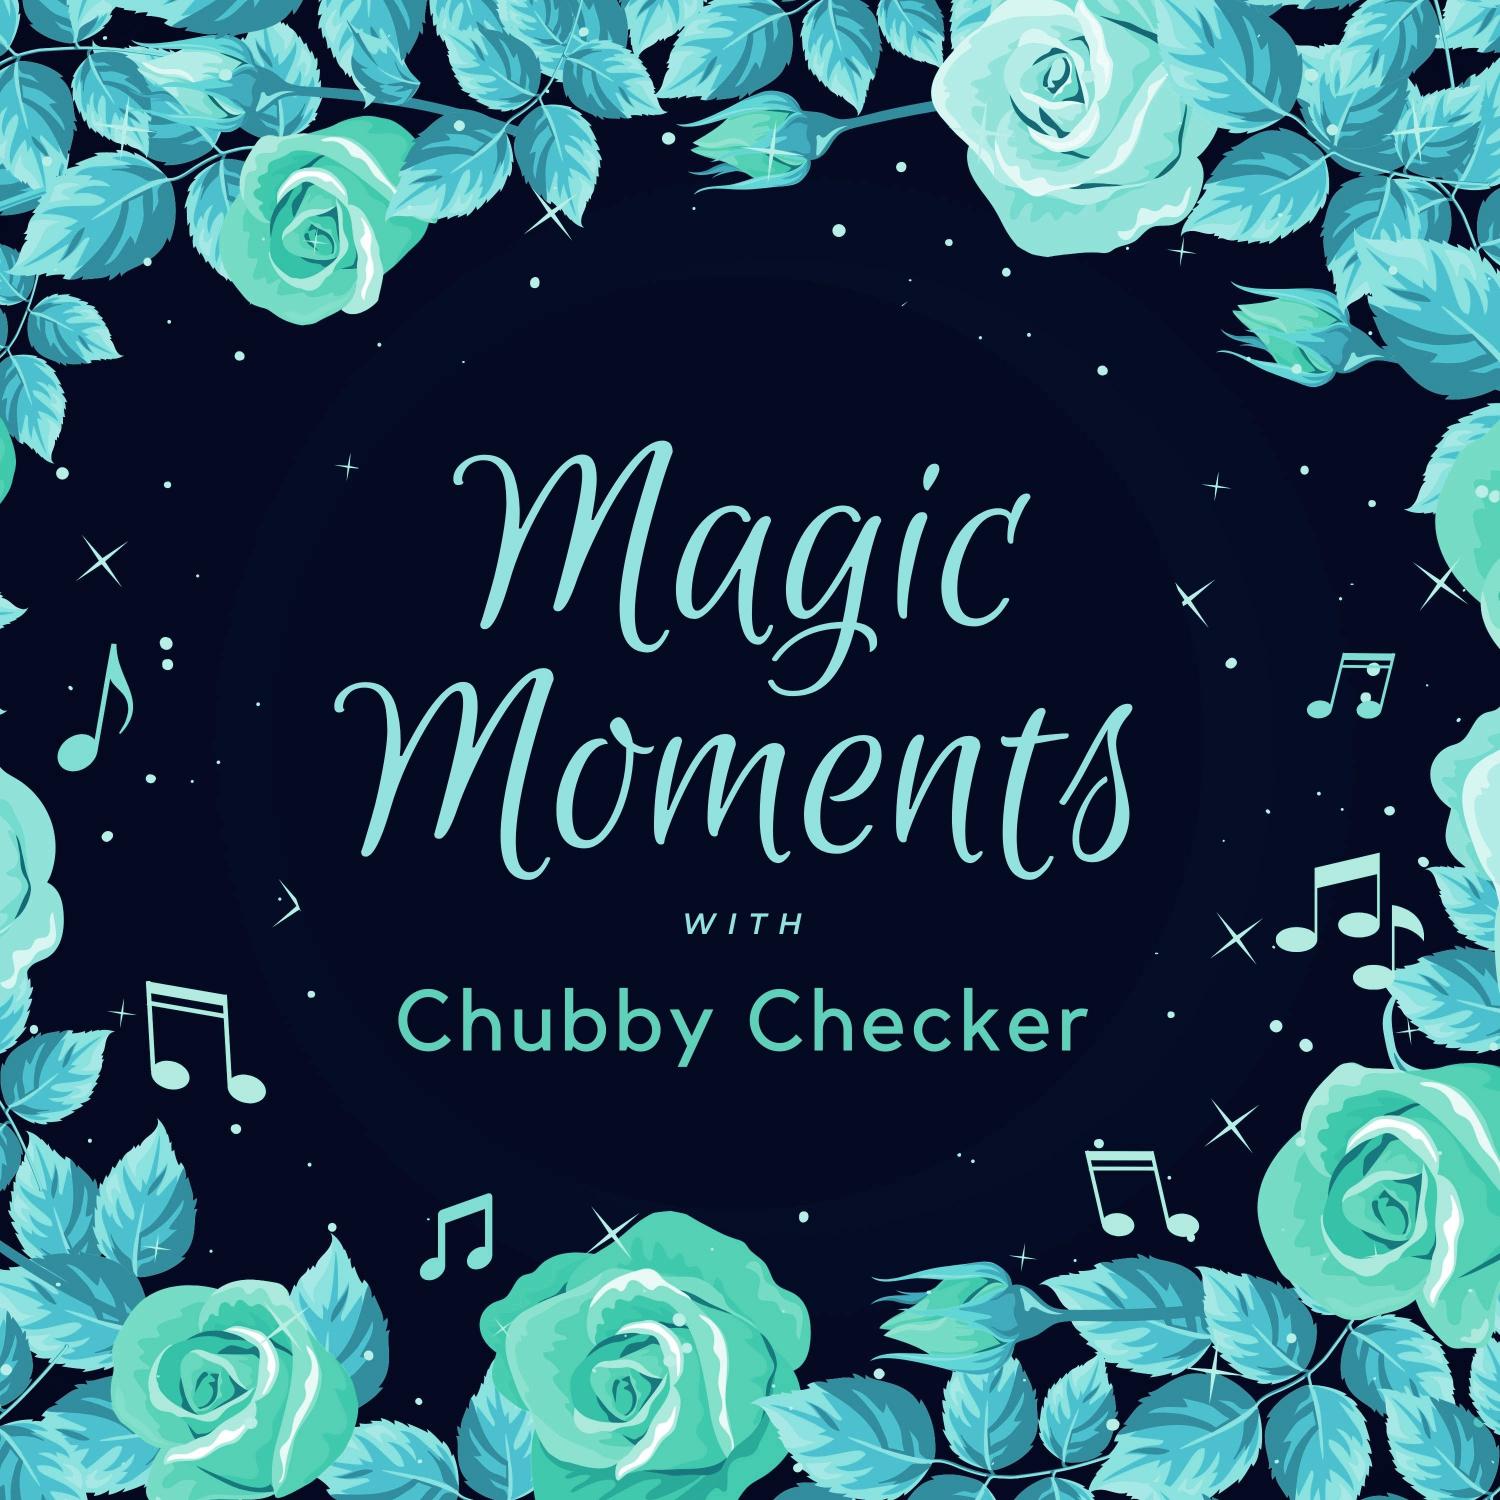 Chubby Checker - The Fly (Original Mix)